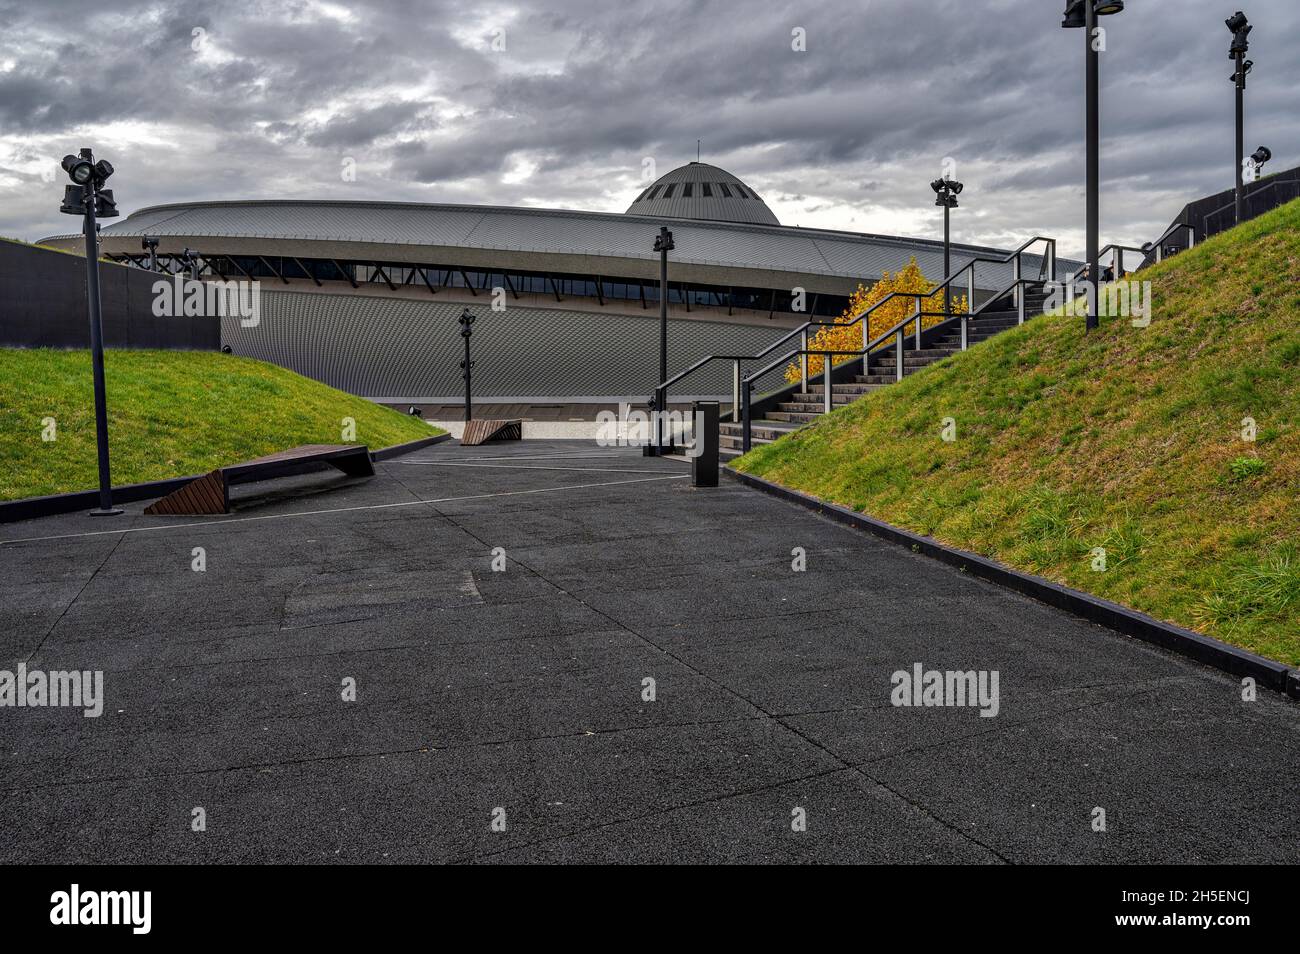 Spodek Arena a Katowice in Polonia Foto Stock